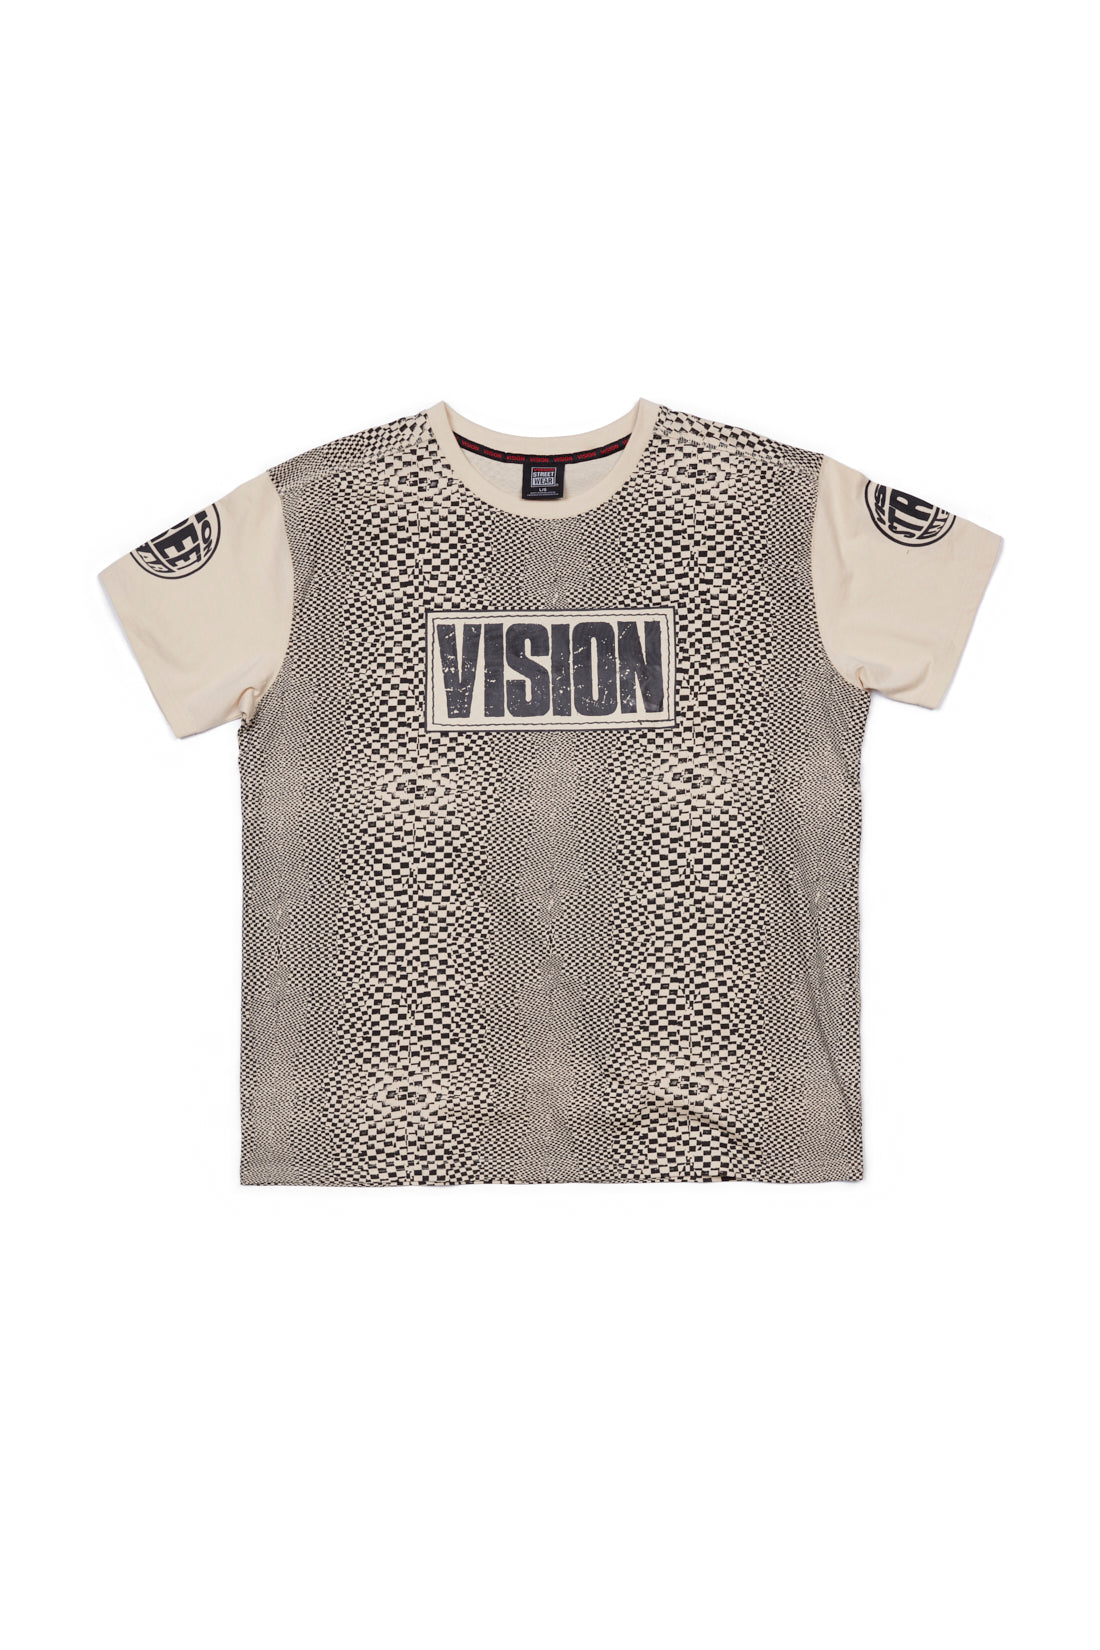 Vision Street Wear Broken Check T-Shirt Bone